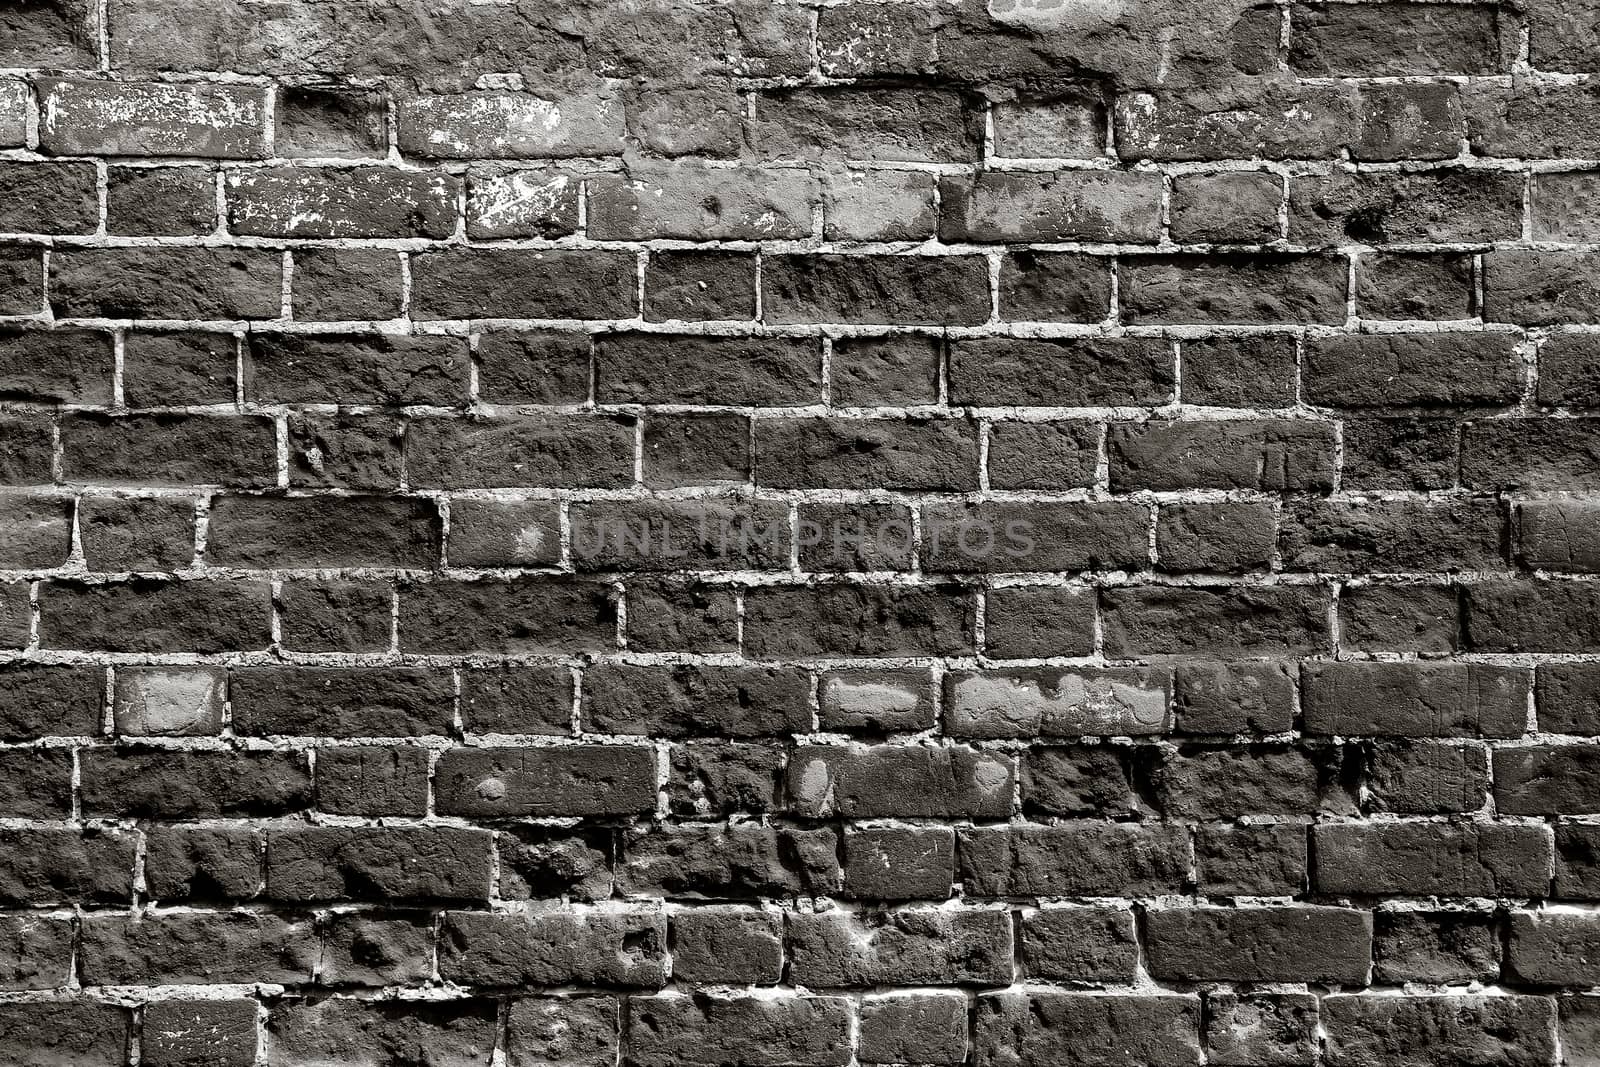 Old brick wall with dark bricks